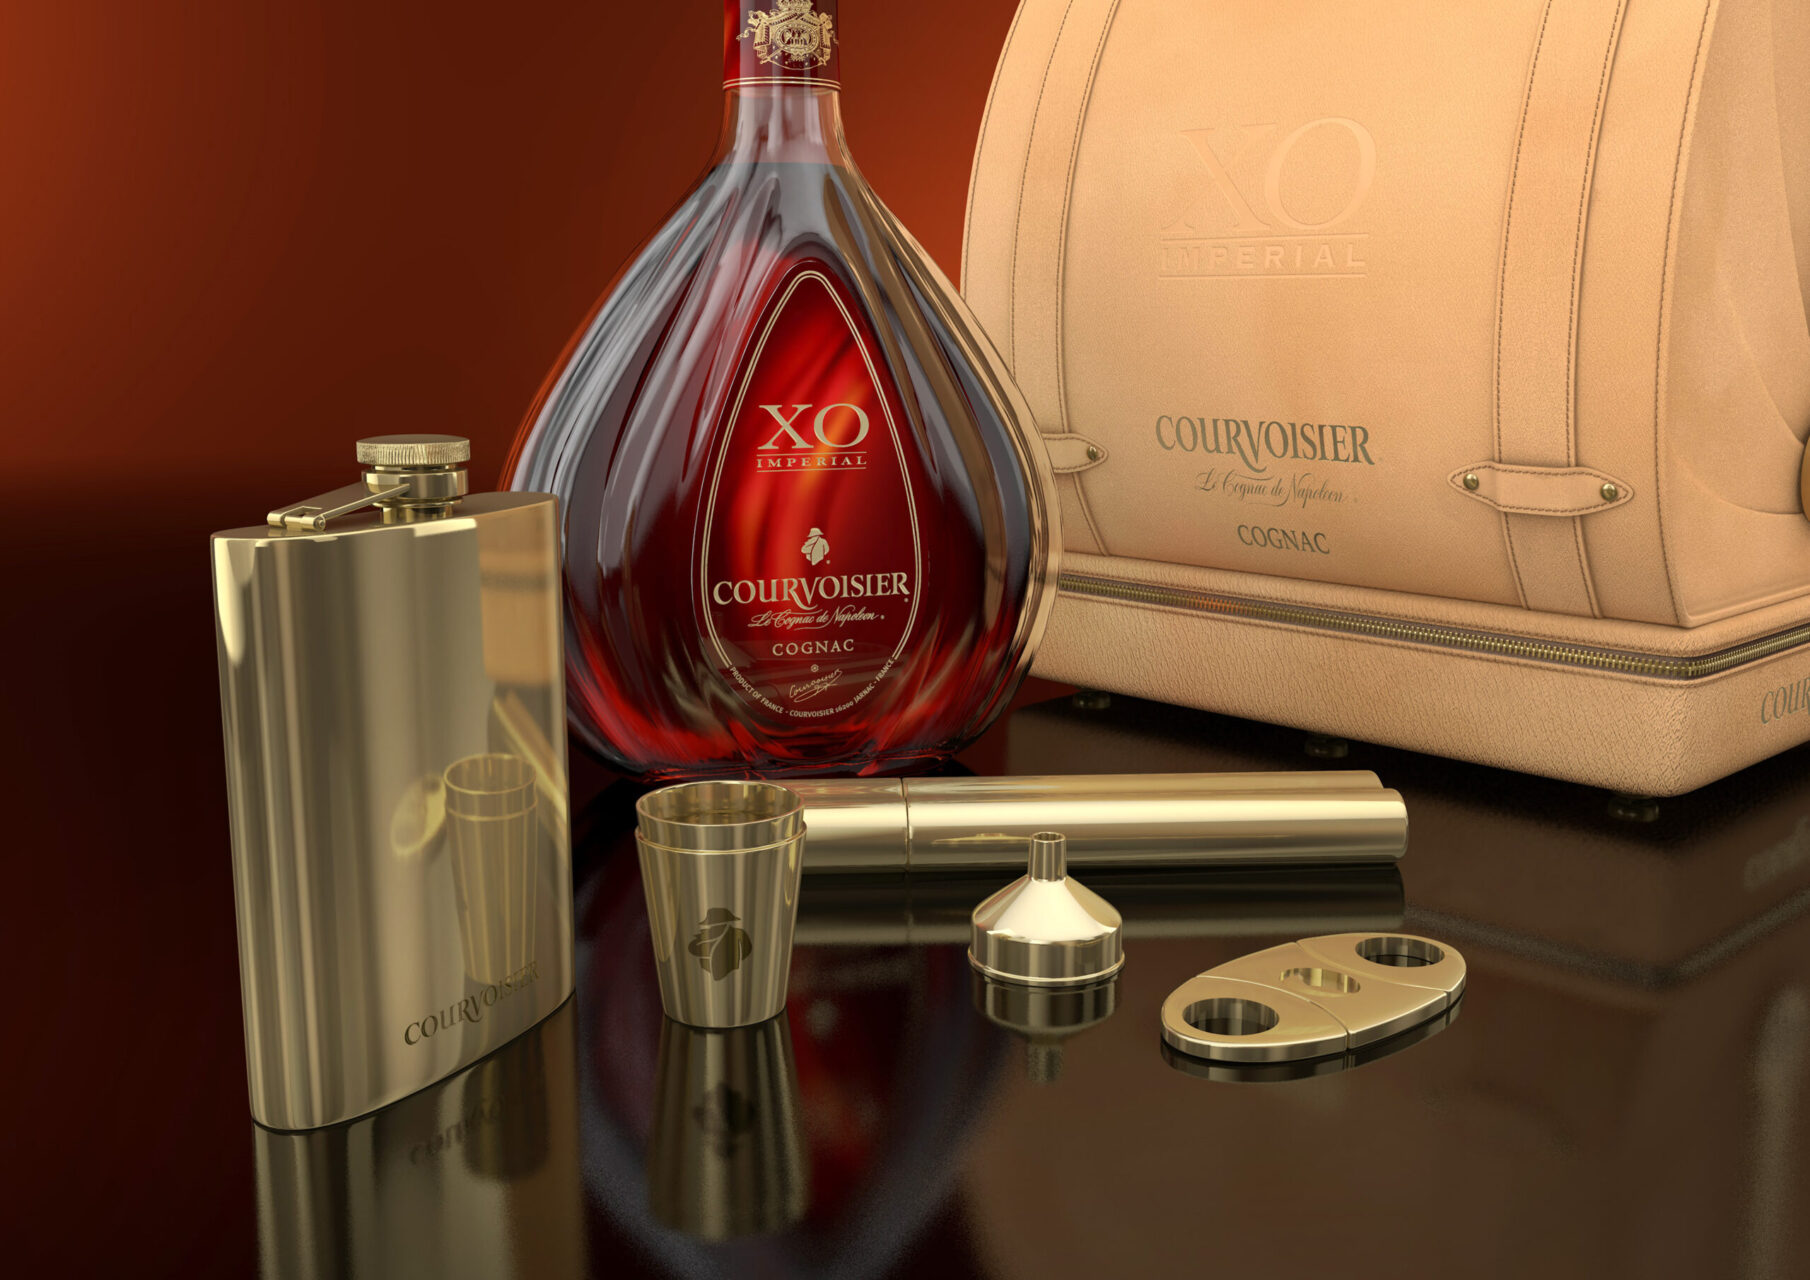 Courvoisier cognac alcohol value added packaging design europe 2